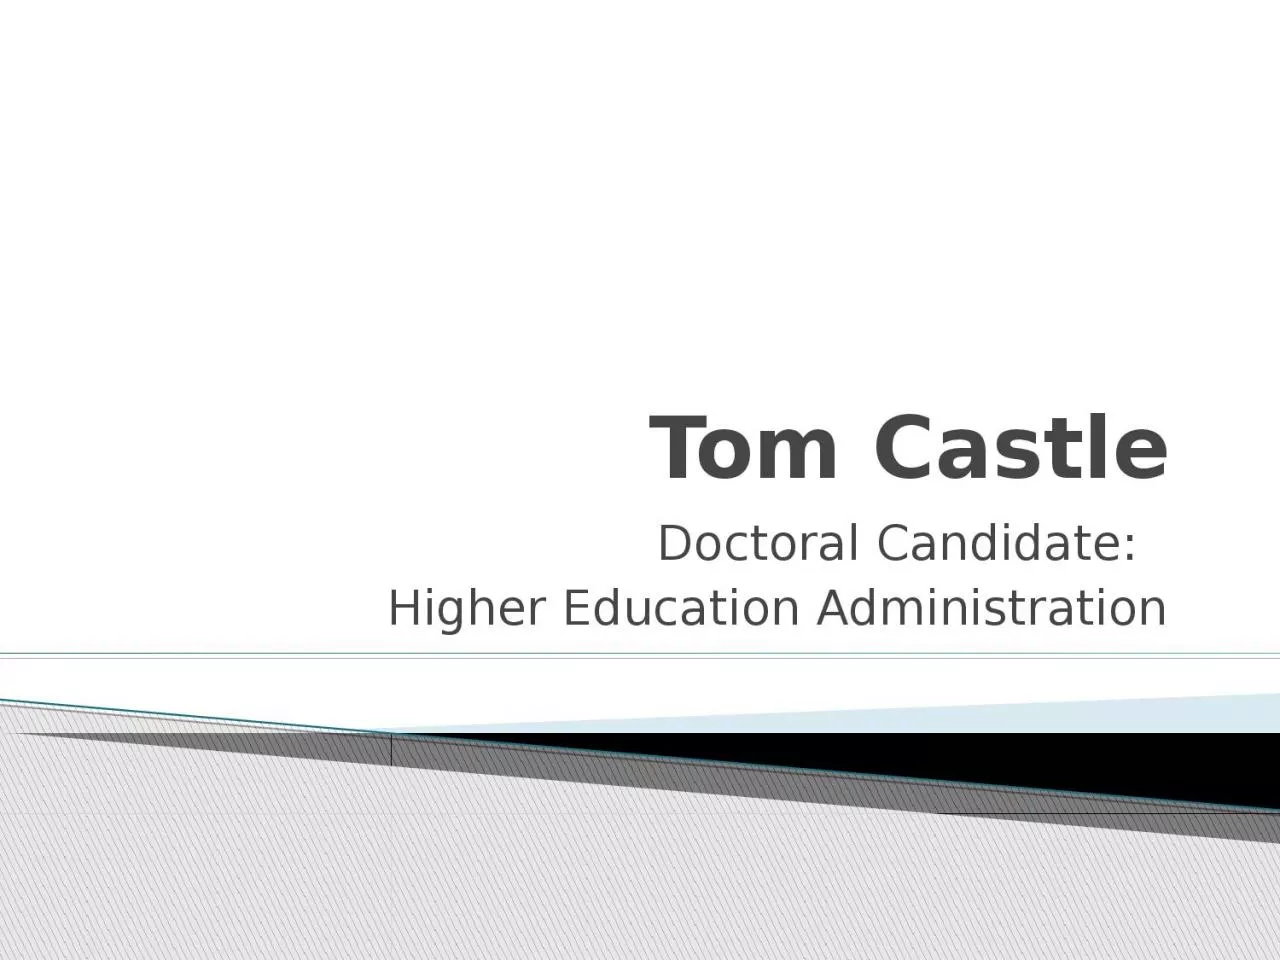 Tom Castle Doctoral Candidate: